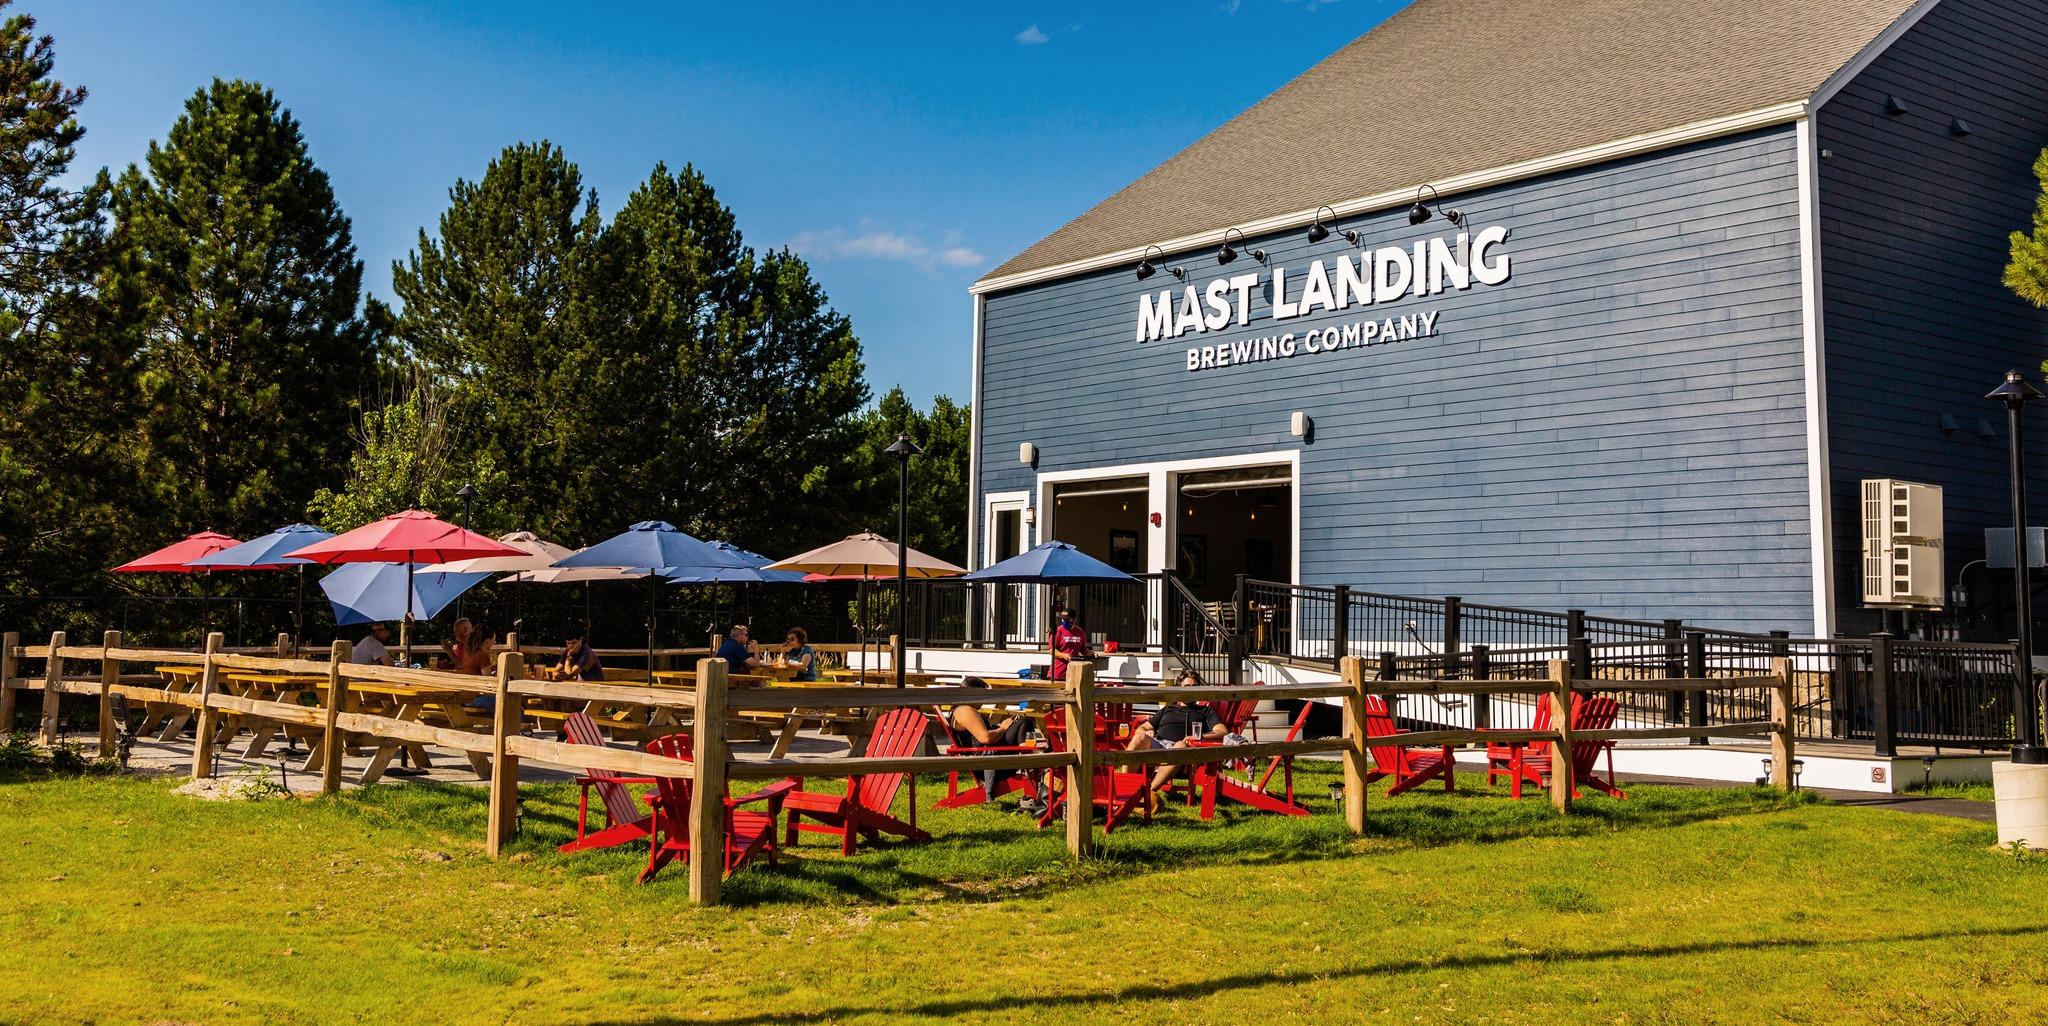 Pet Friendly Mast Landing Brewing Company